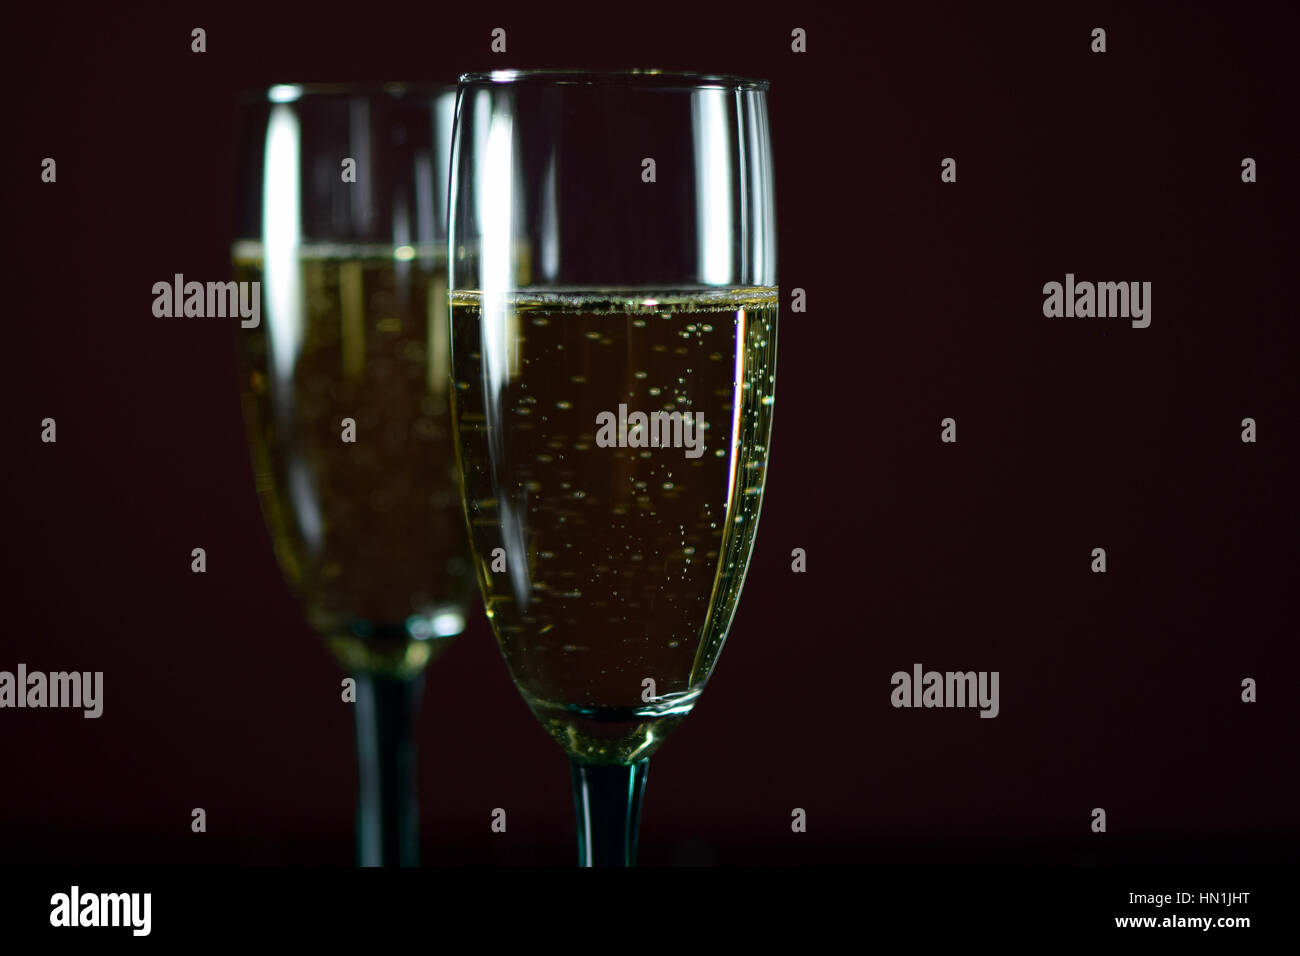 https://c8.alamy.com/comp/HN1JHT/two-glasses-of-sparkling-wine-close-up-HN1JHT.jpg